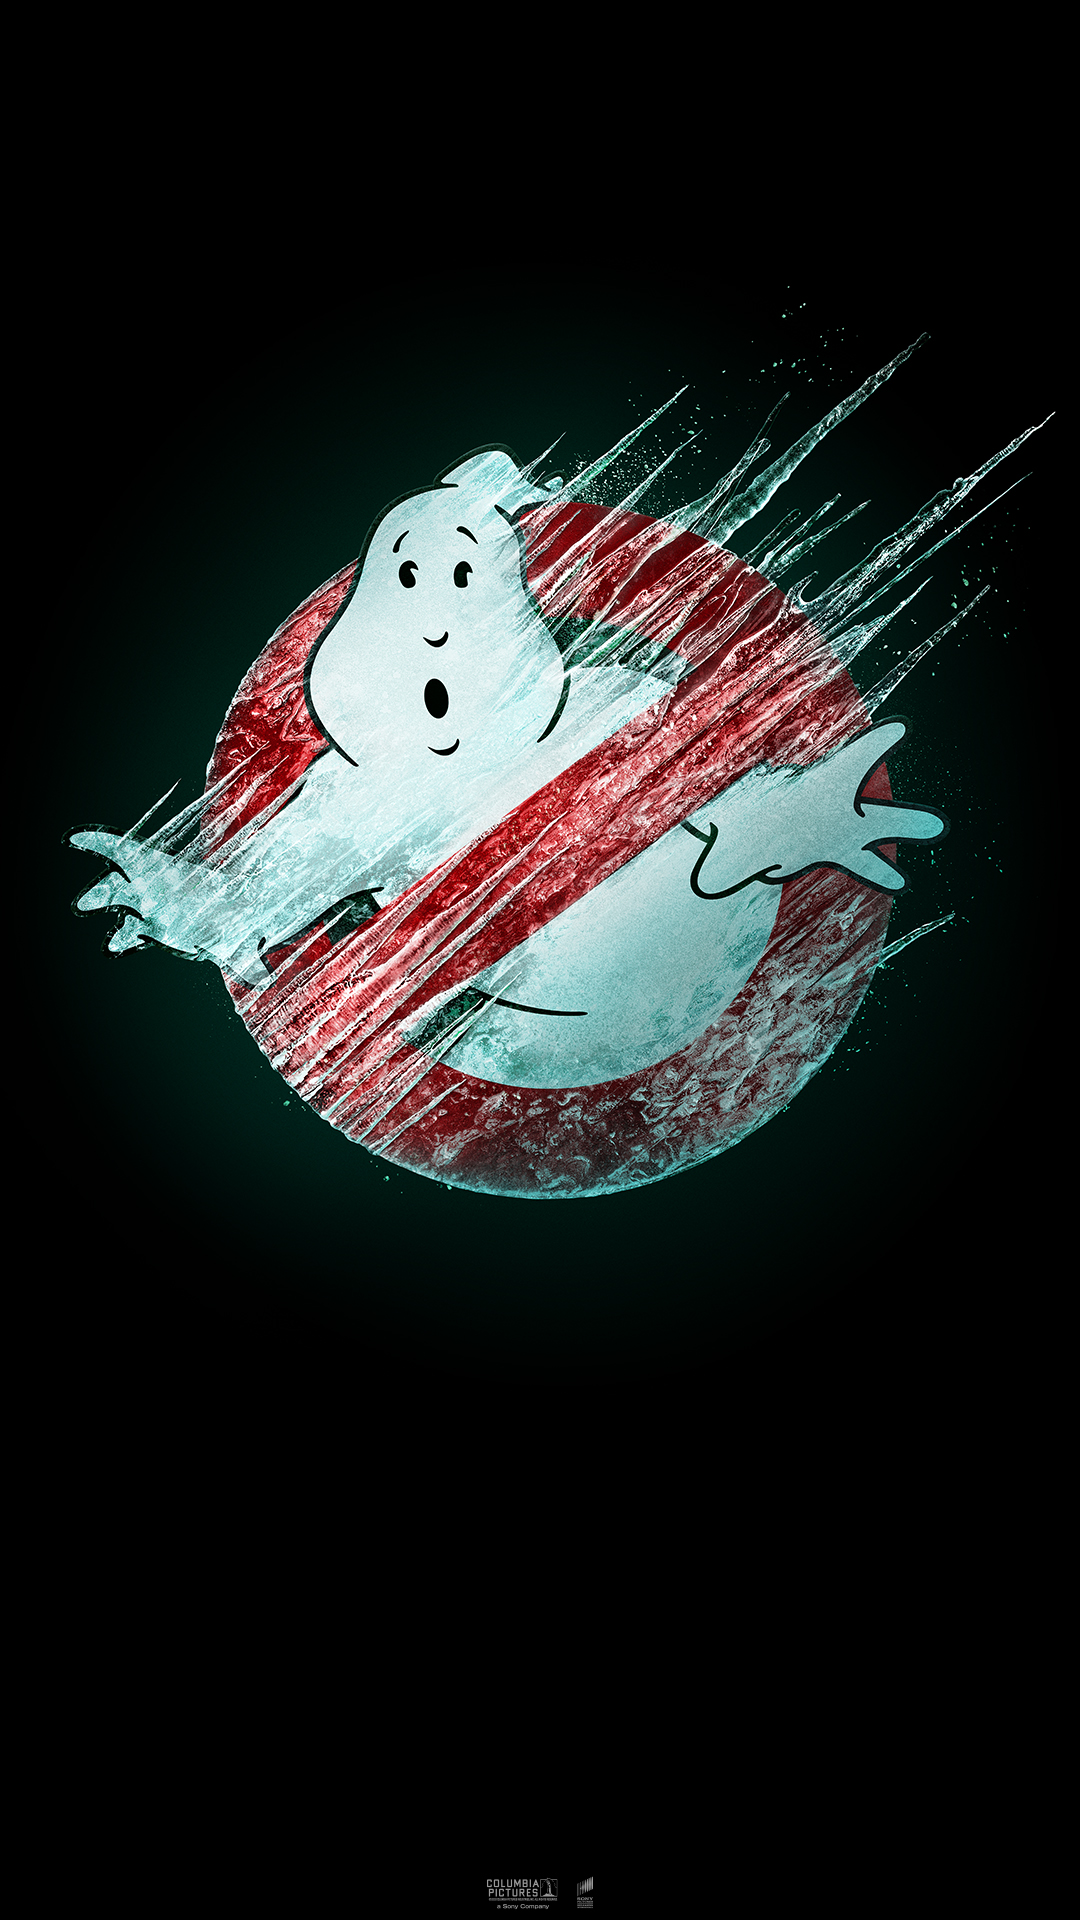 la key art di ghostbusters minaccia glaciale - nerdface